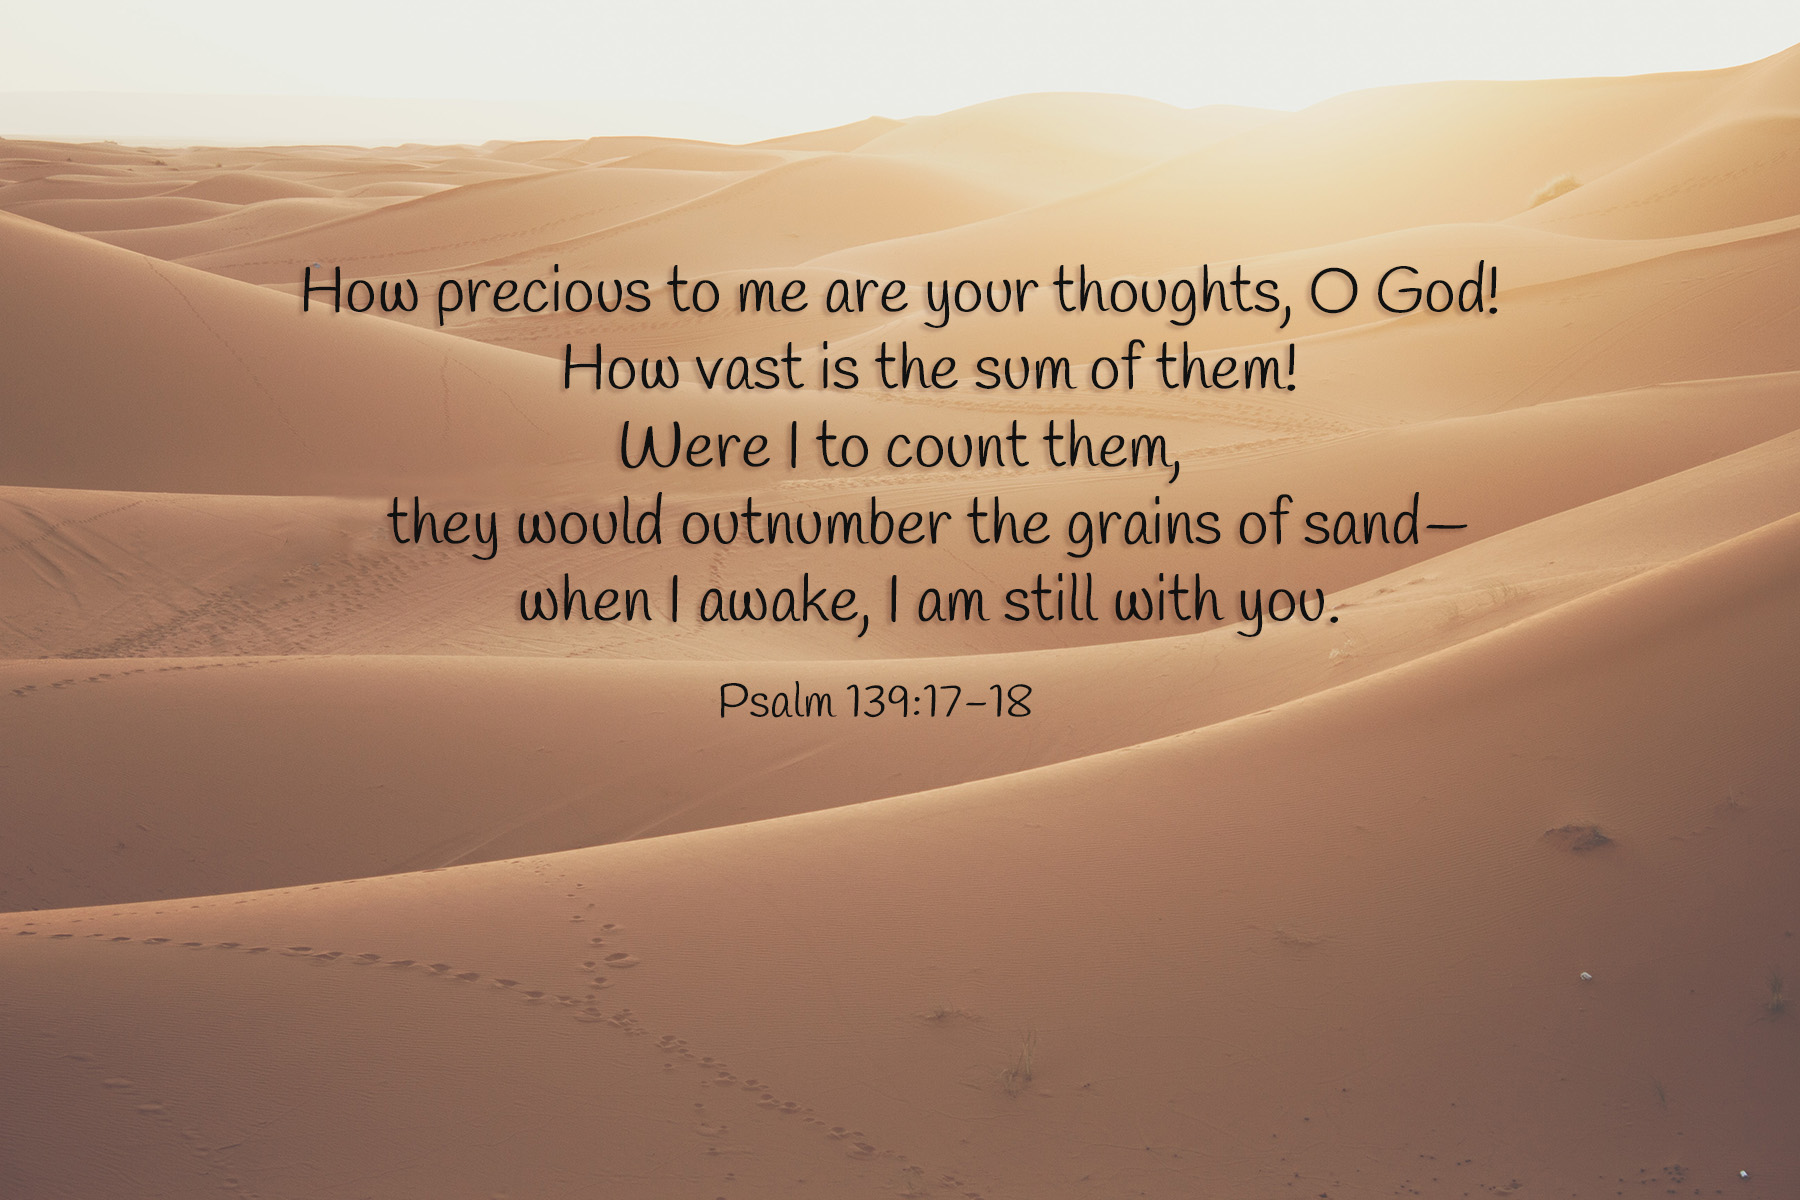 Psalm 139:17-18